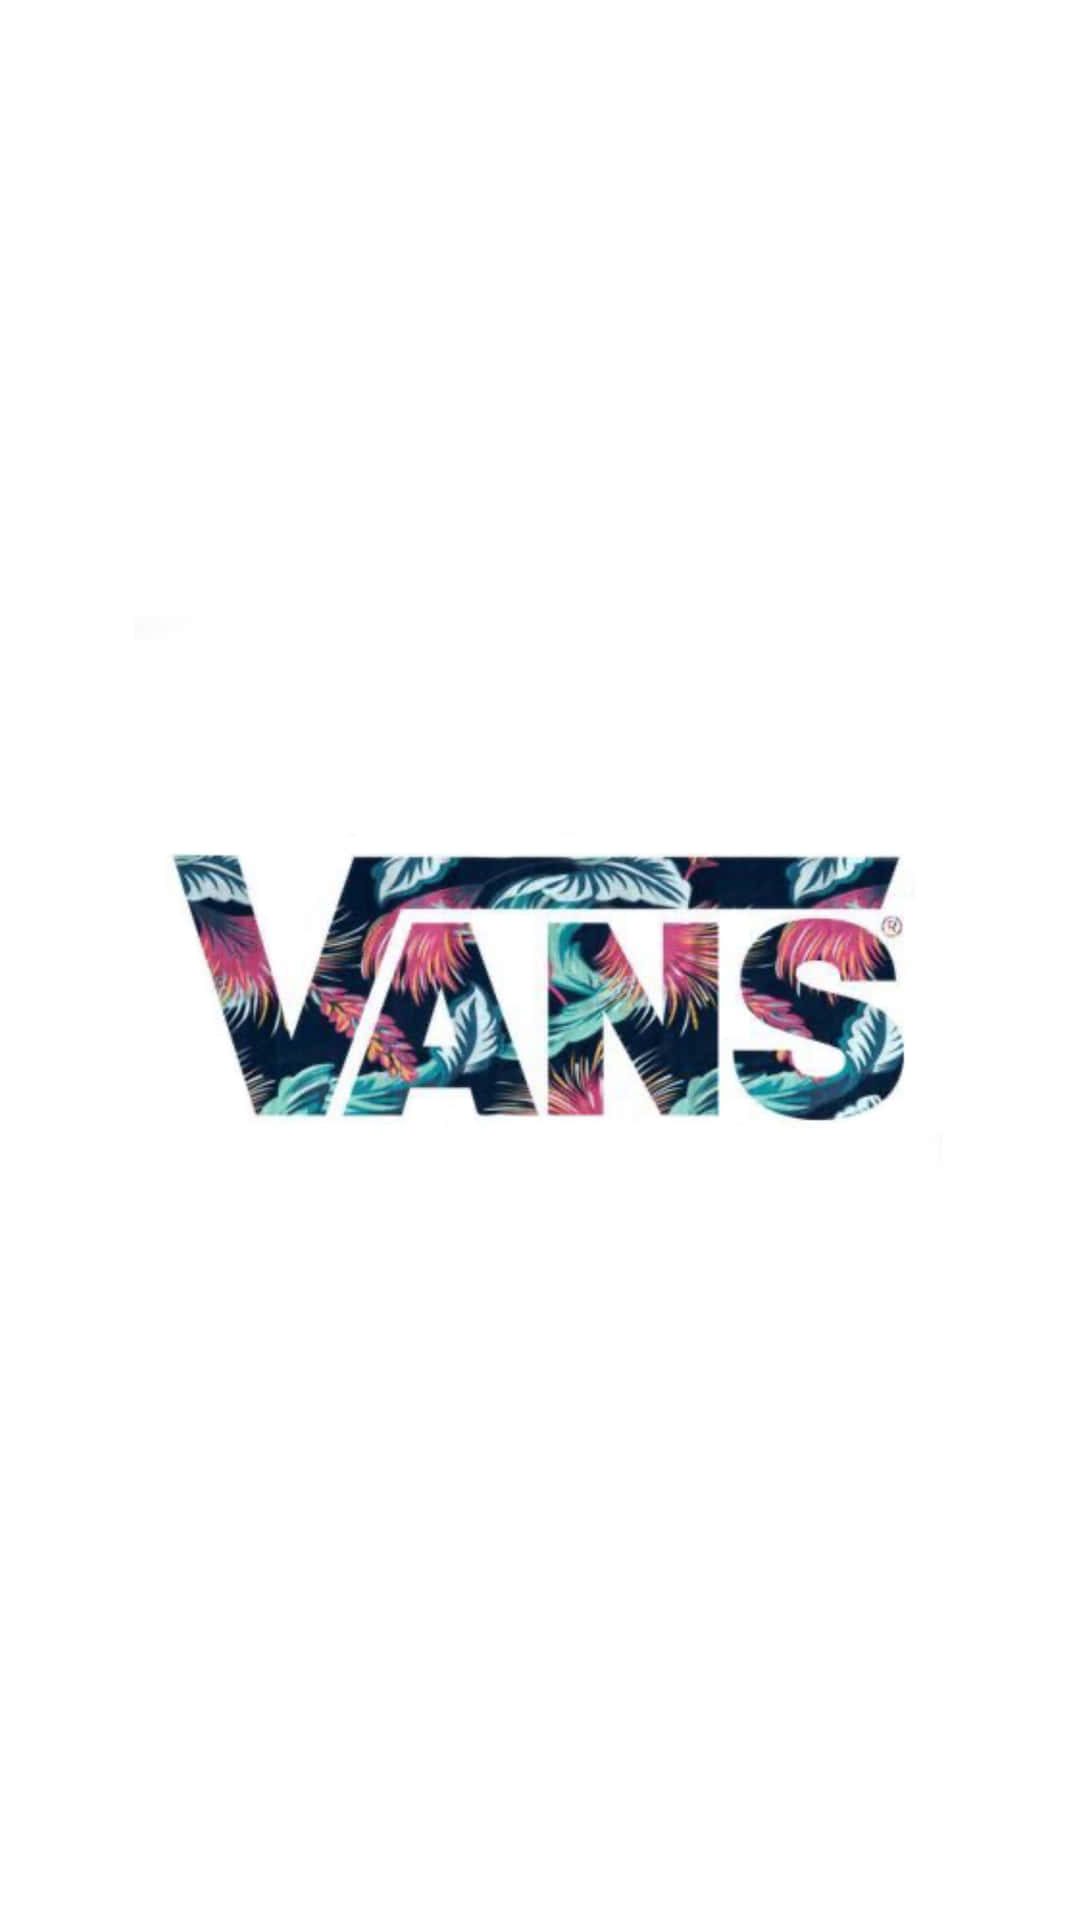 "Cool Vans Logo" Wallpaper